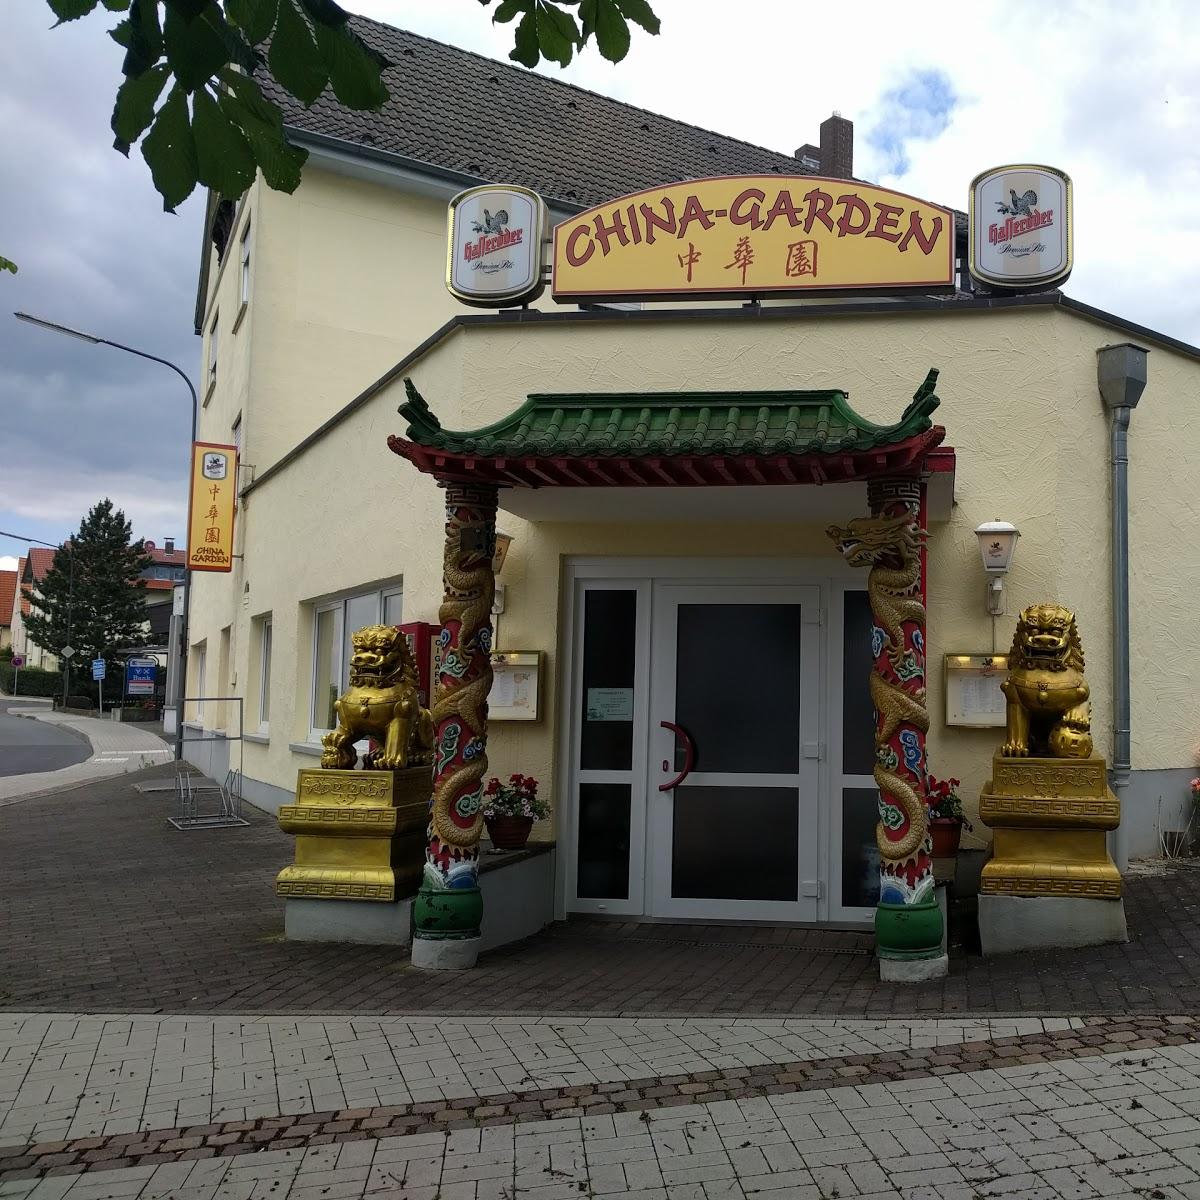 Restaurant "Chinagarden" in  Hünfeld